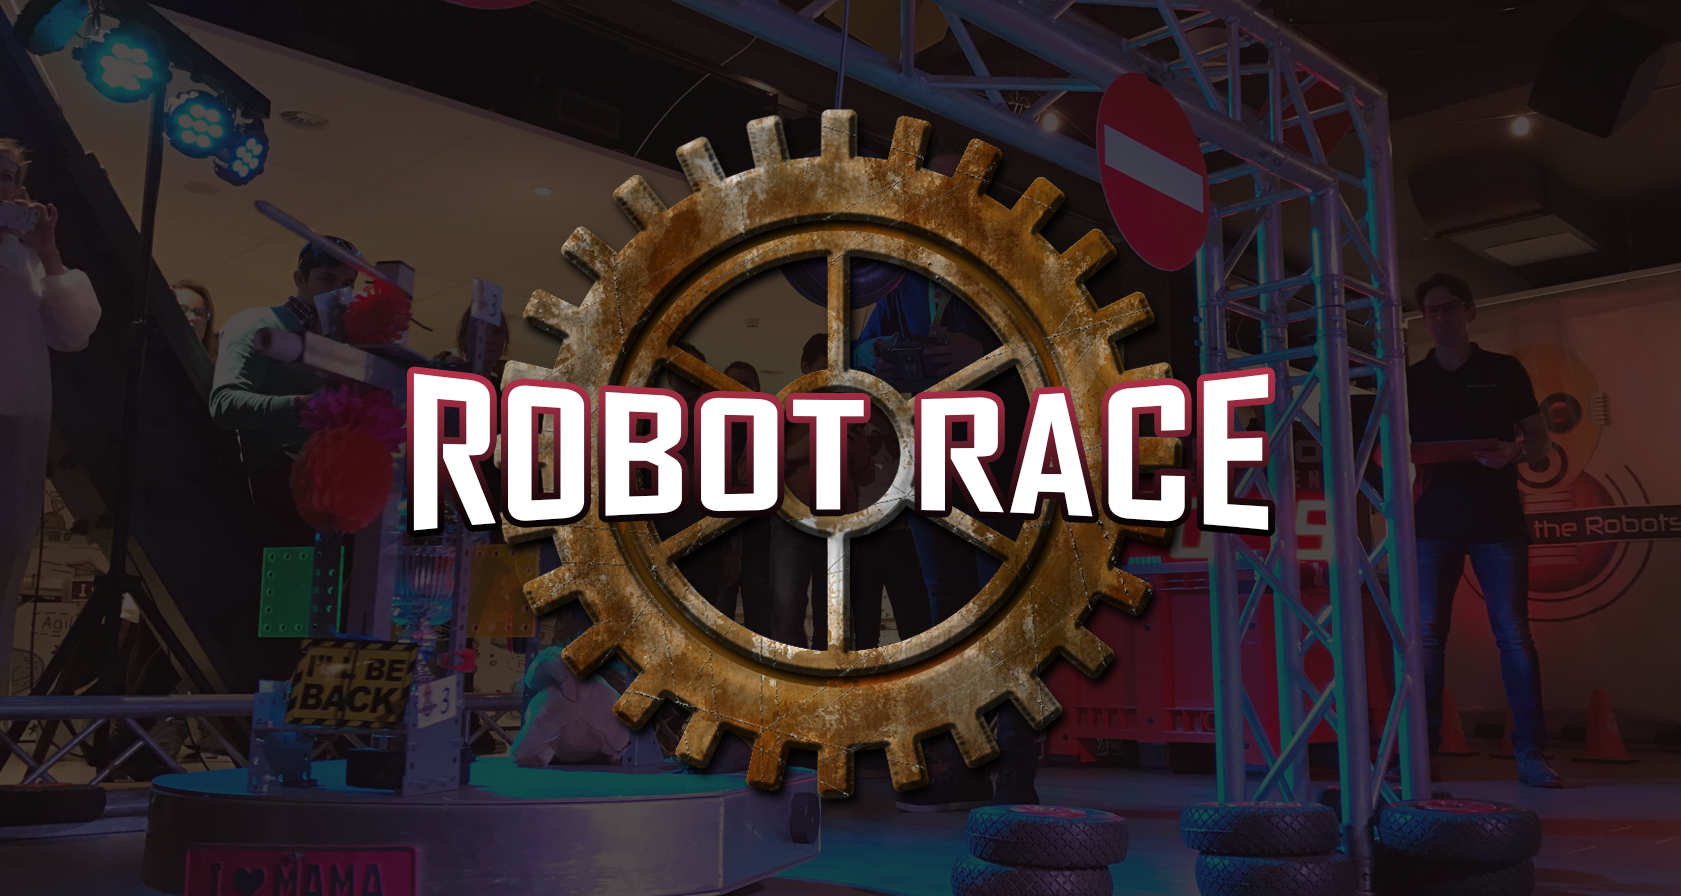 Teamuitje: Robot race: technisch teamuitje